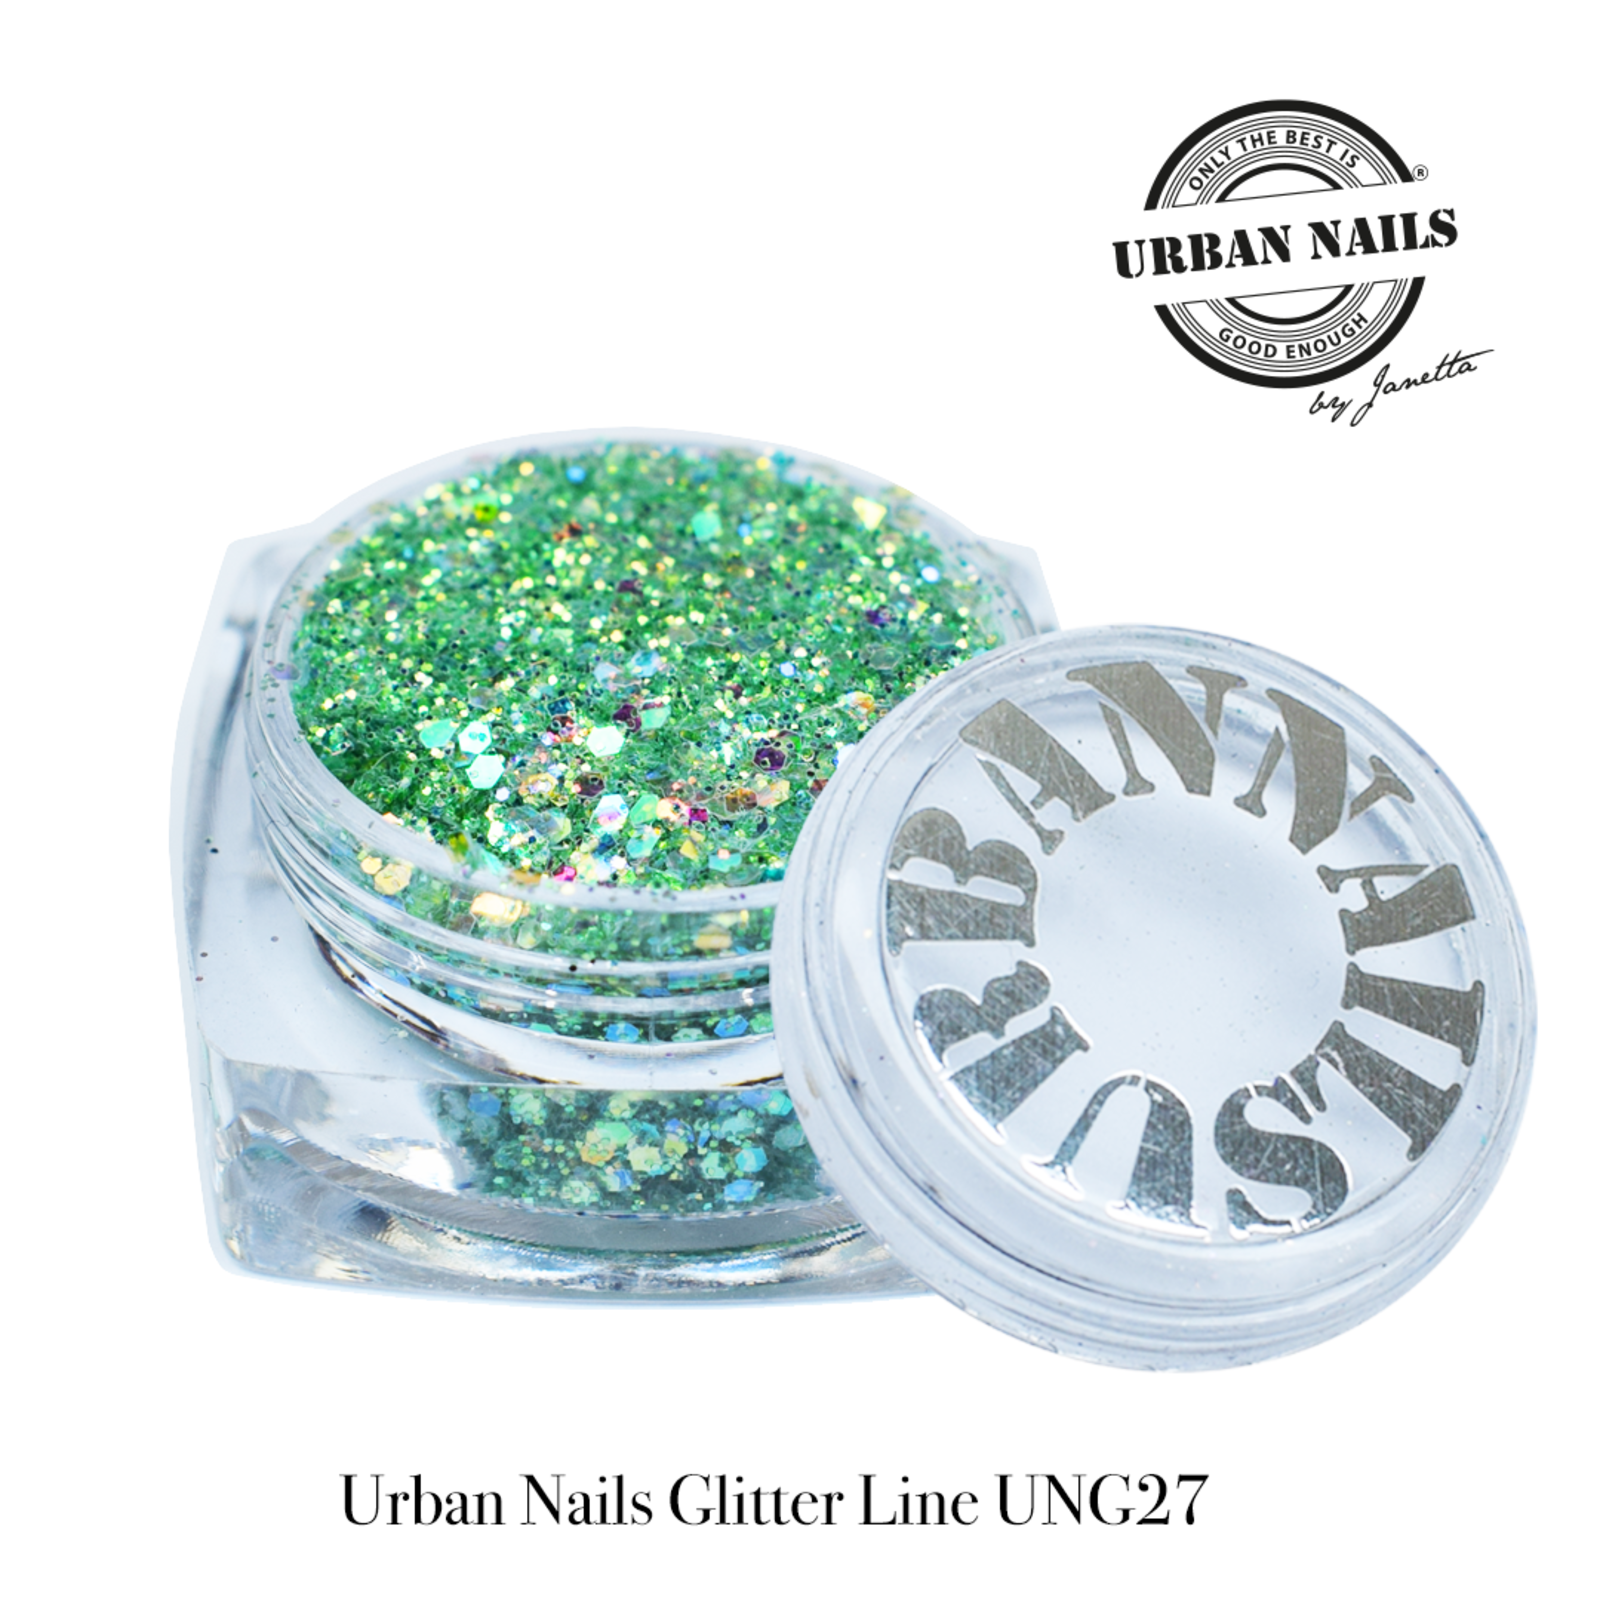 Urban nails Glitter Line UNG27